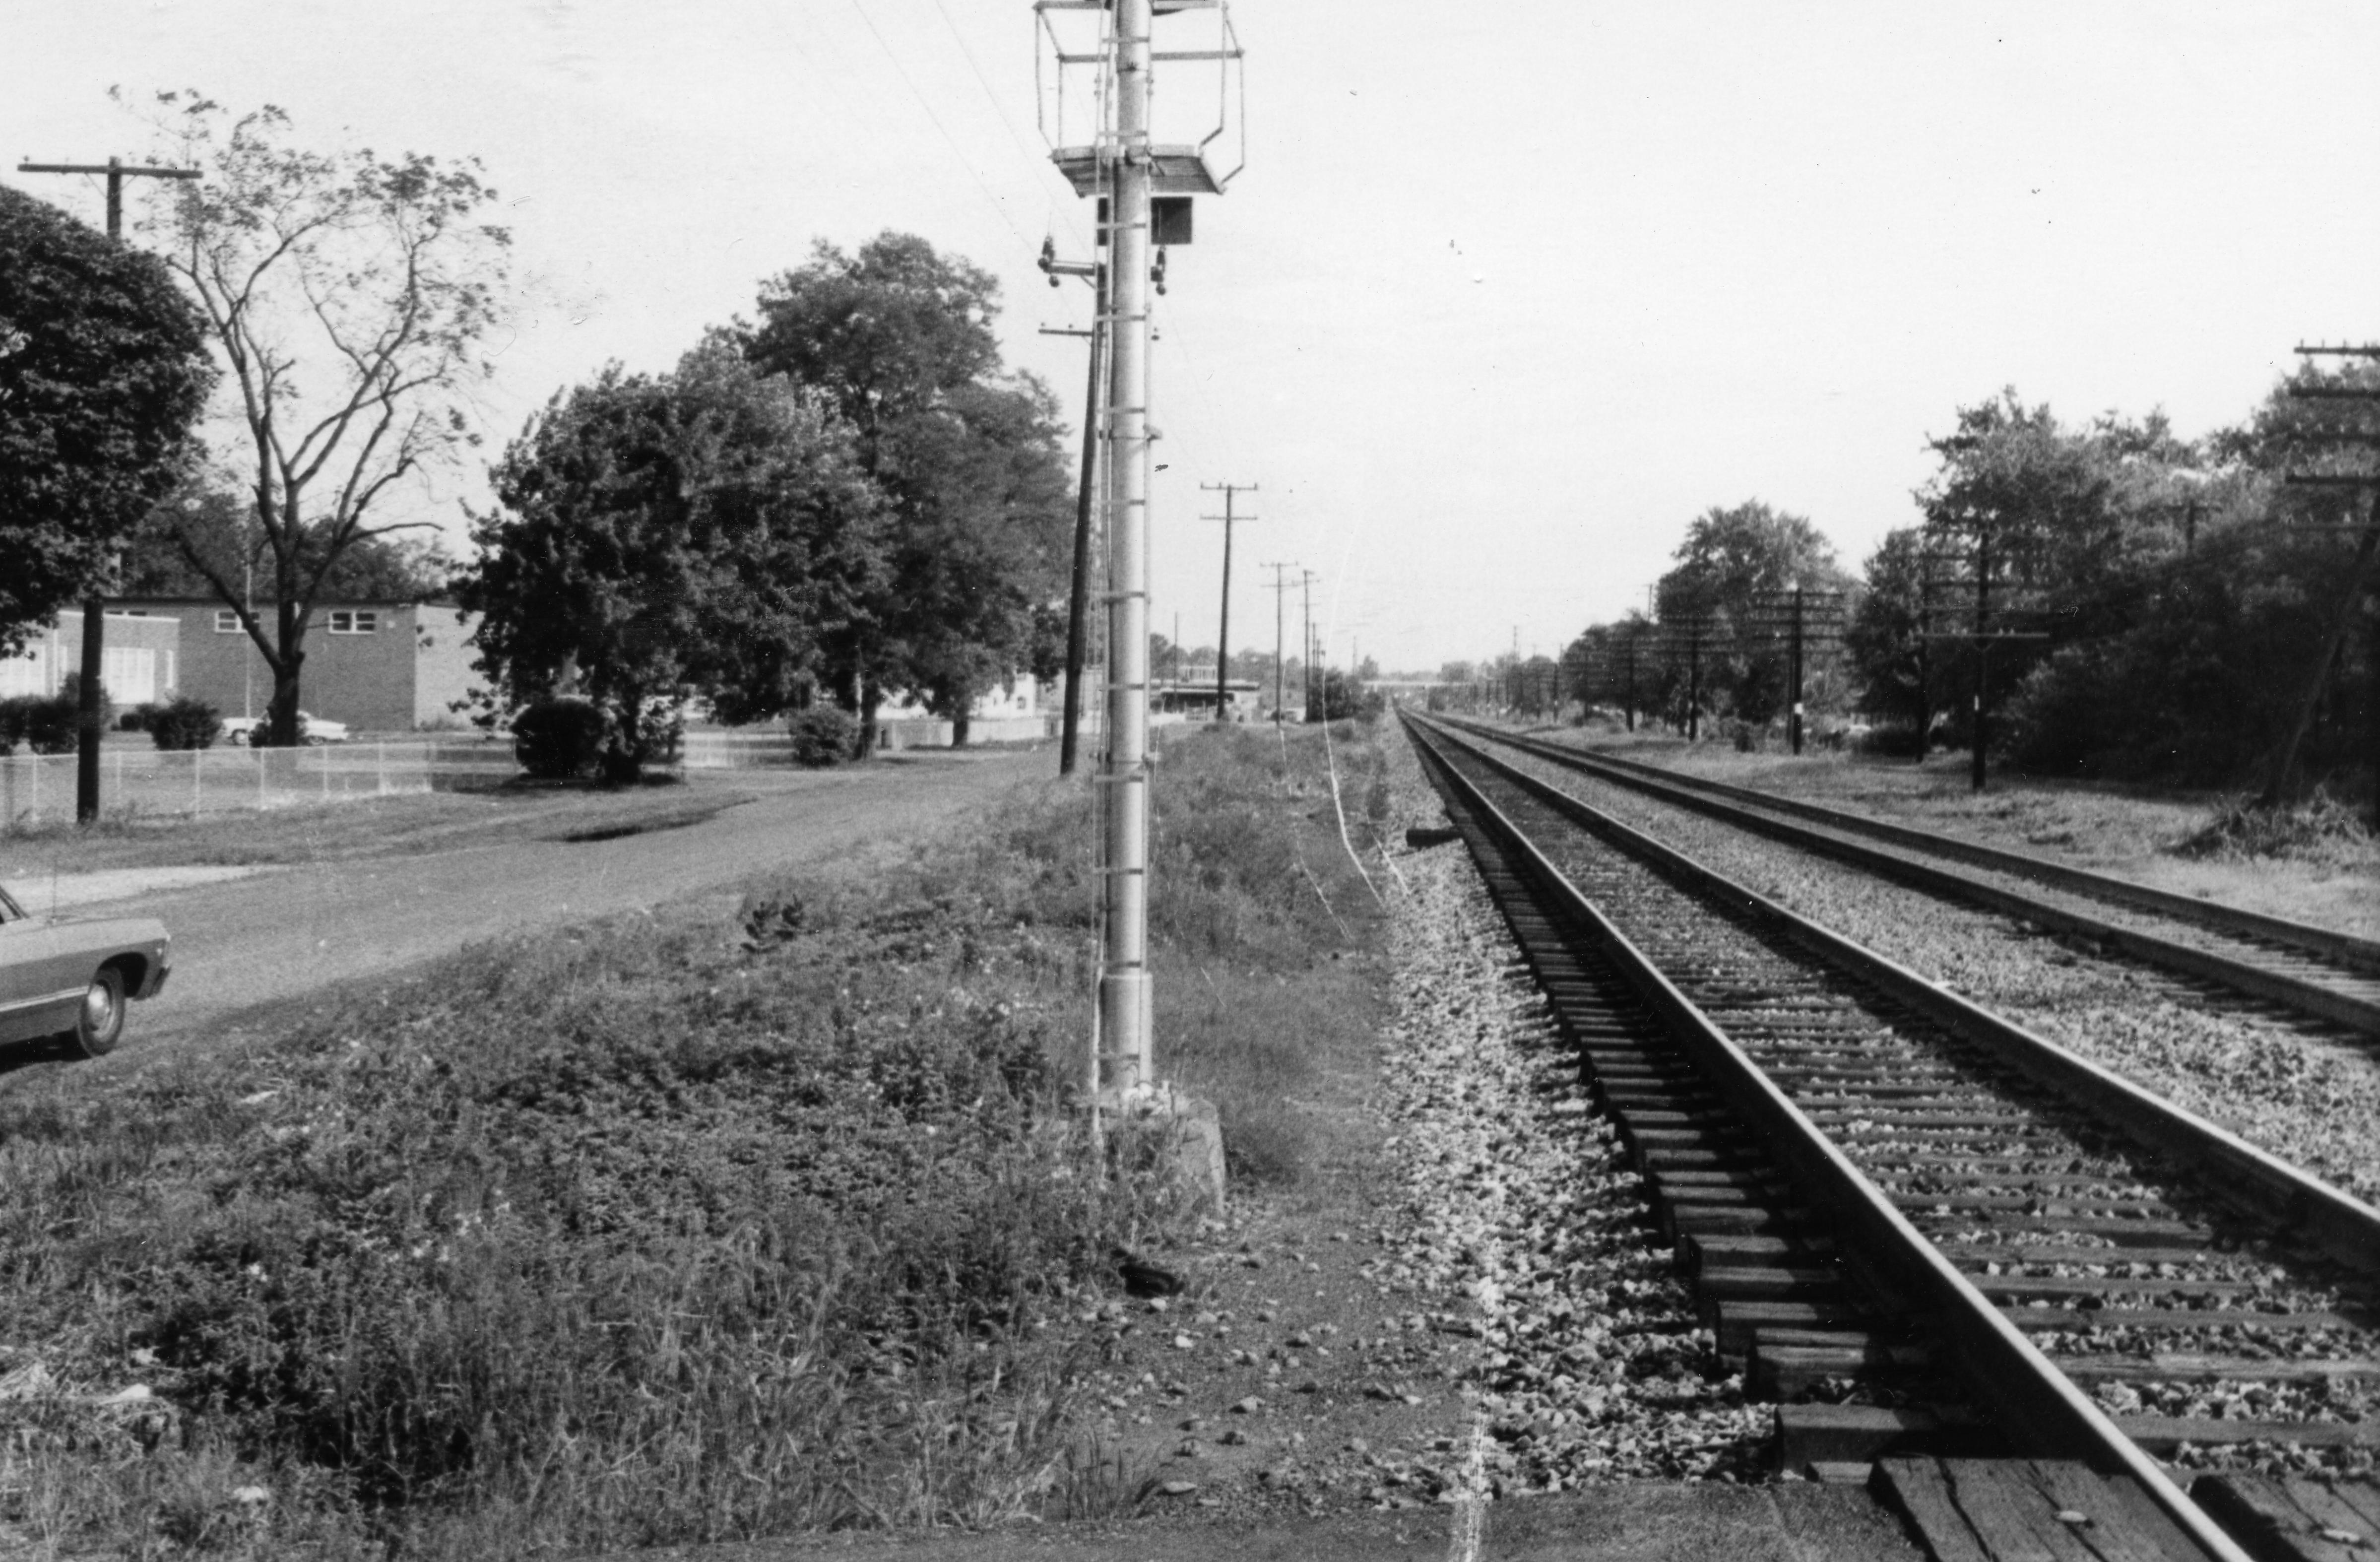 54th and Railroad